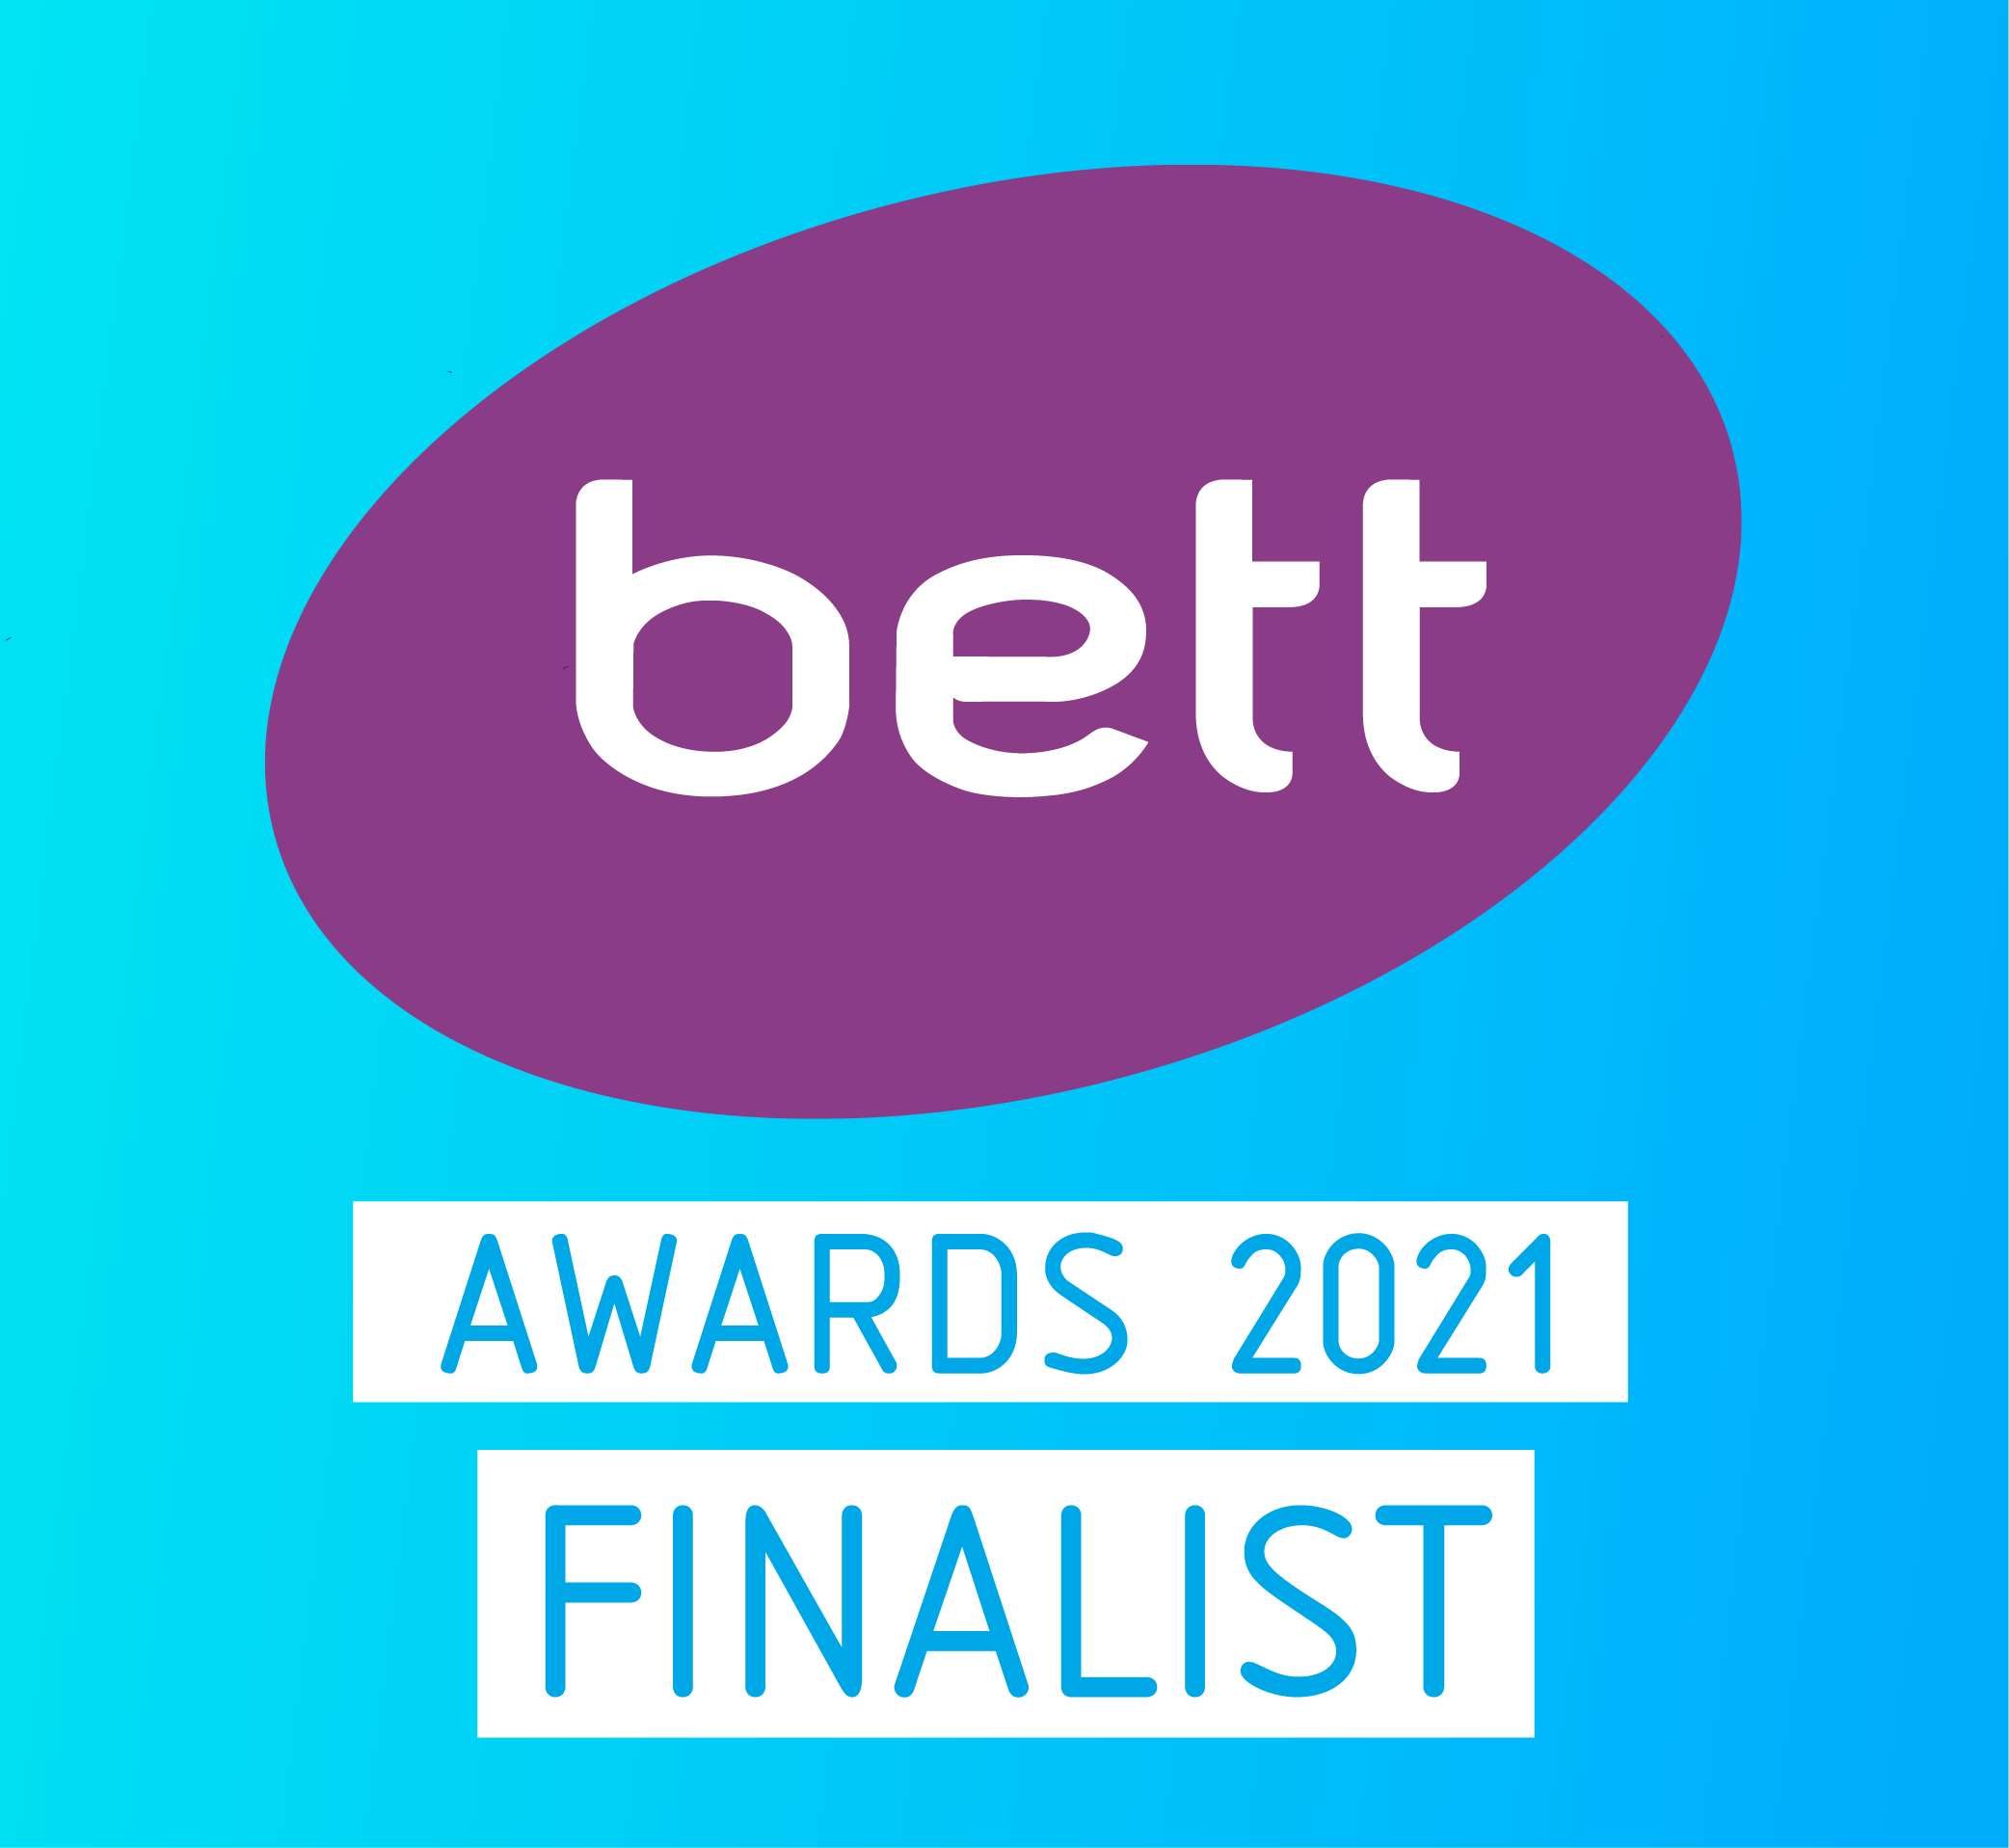 Bett Awards Finalist 2021